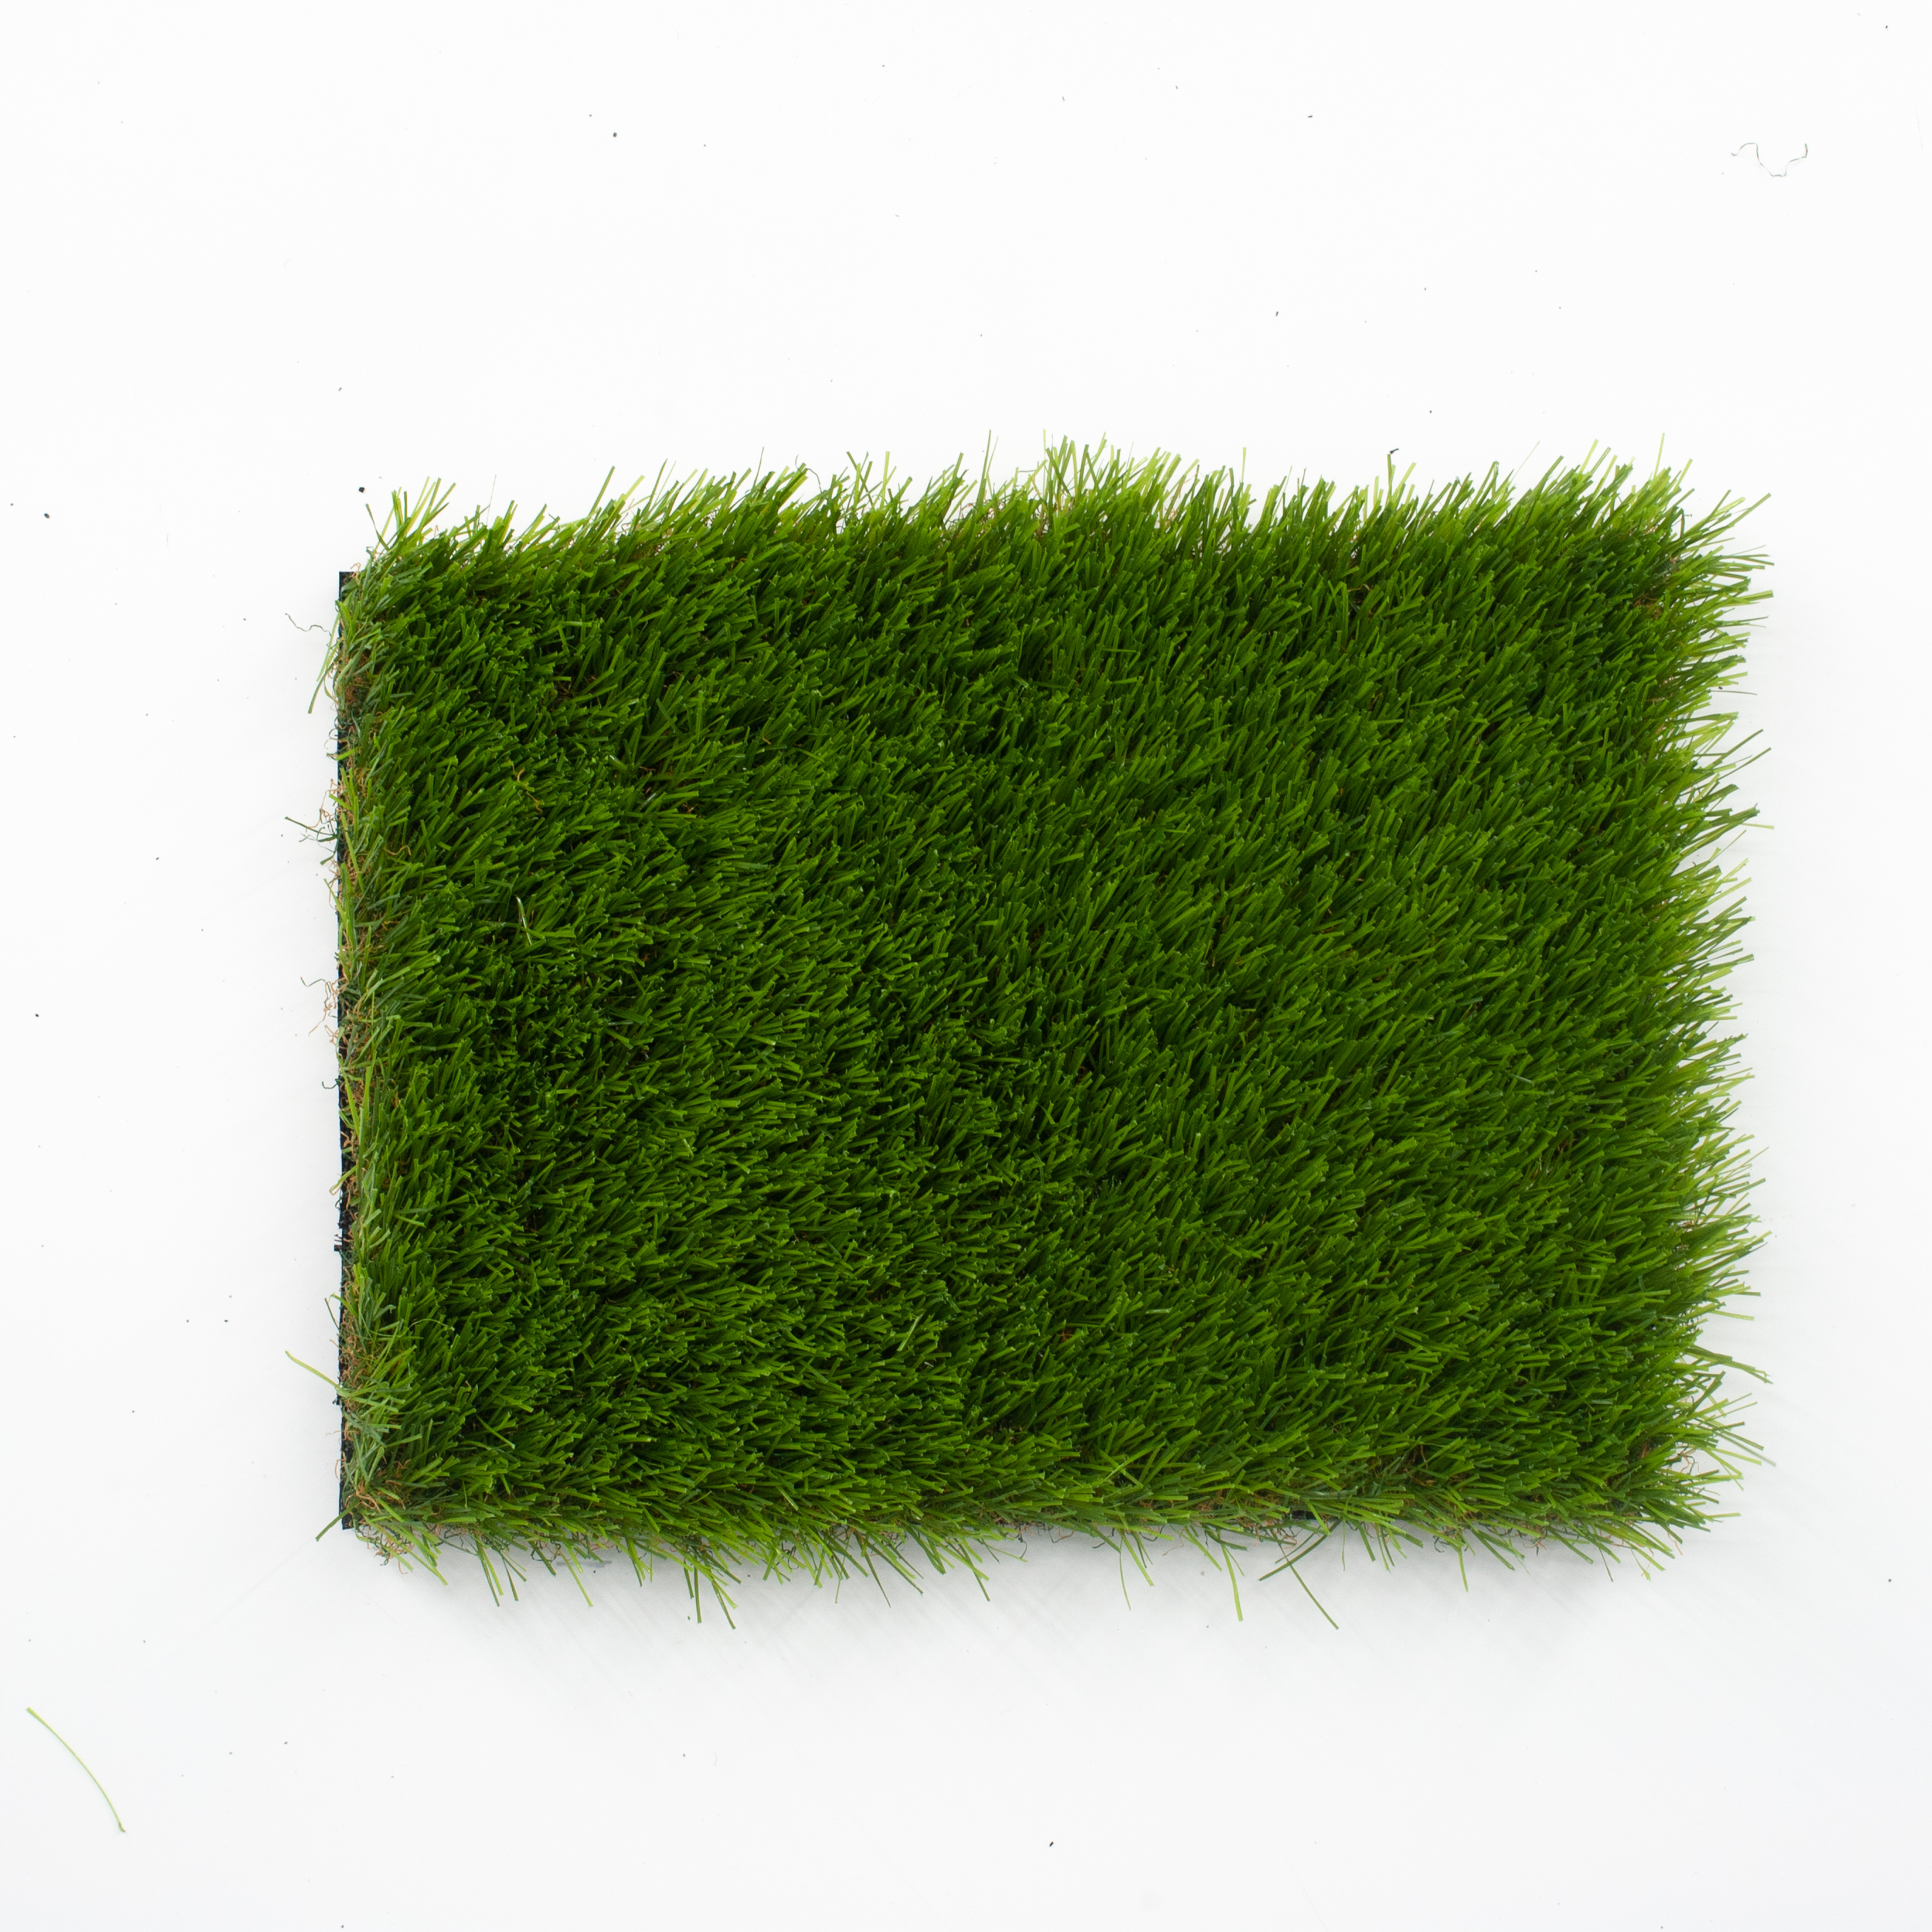 Monofilament Green Artificial Turf for backyard